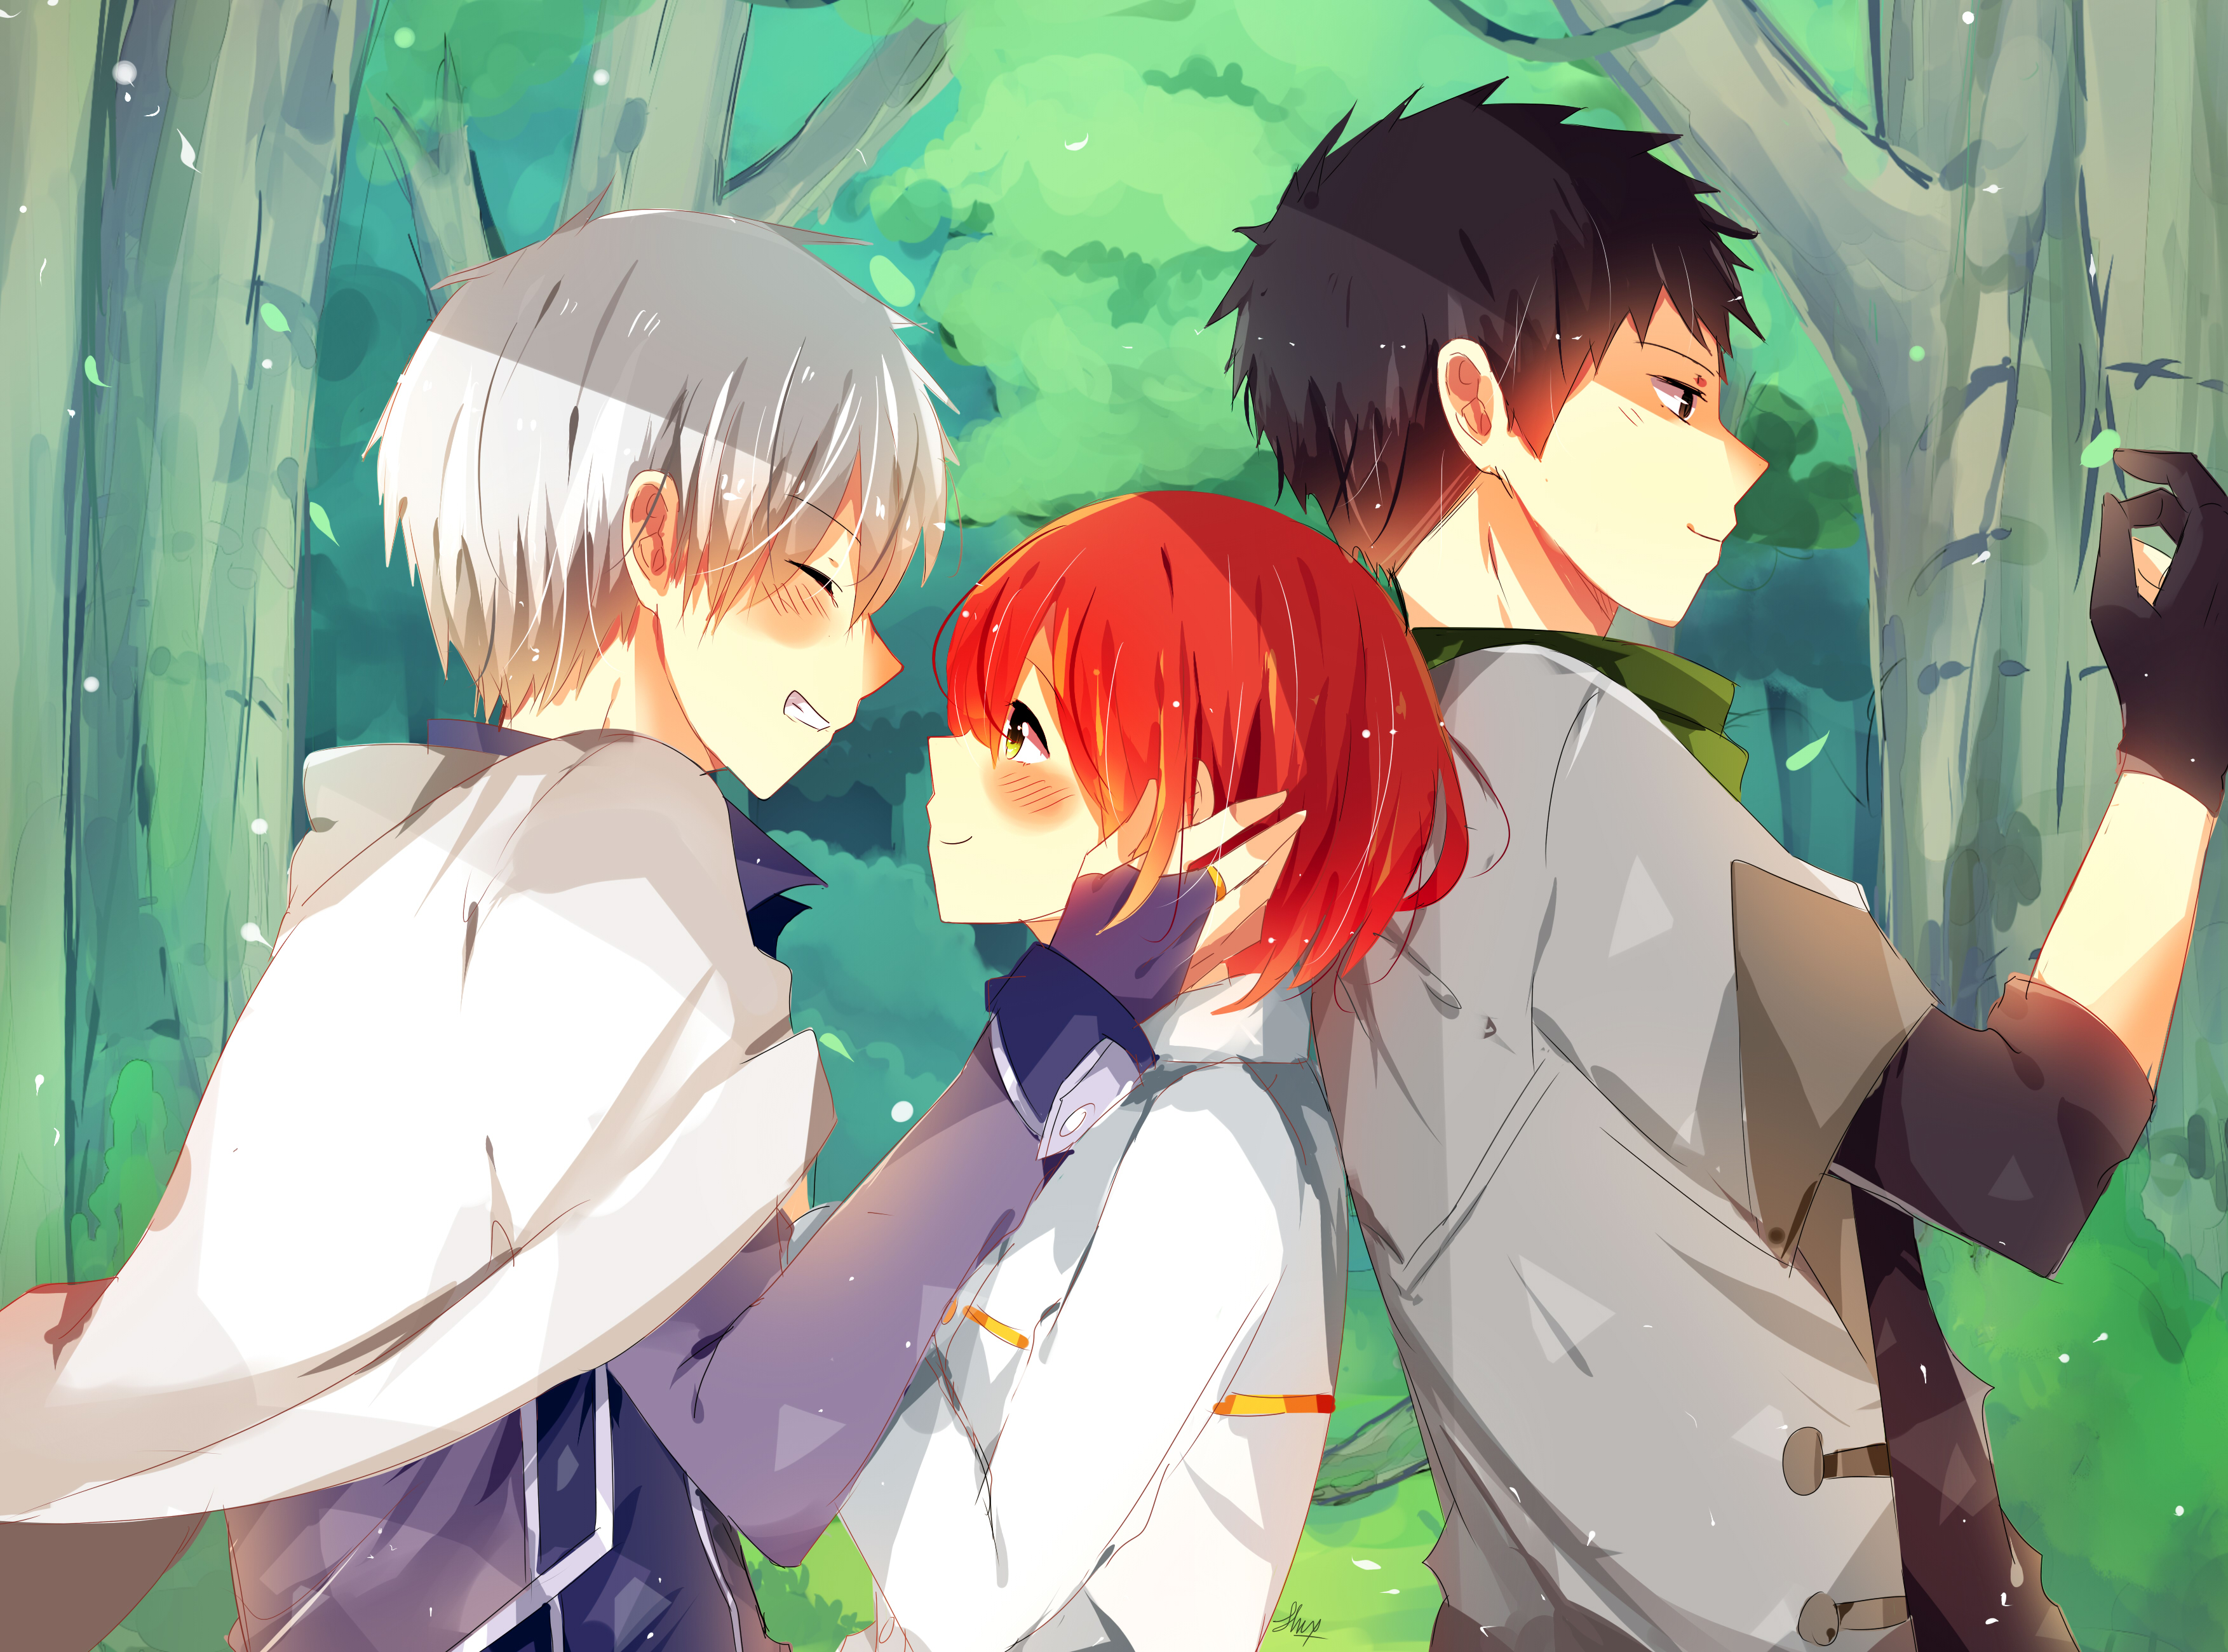 Shirayuki,Zen and Obi